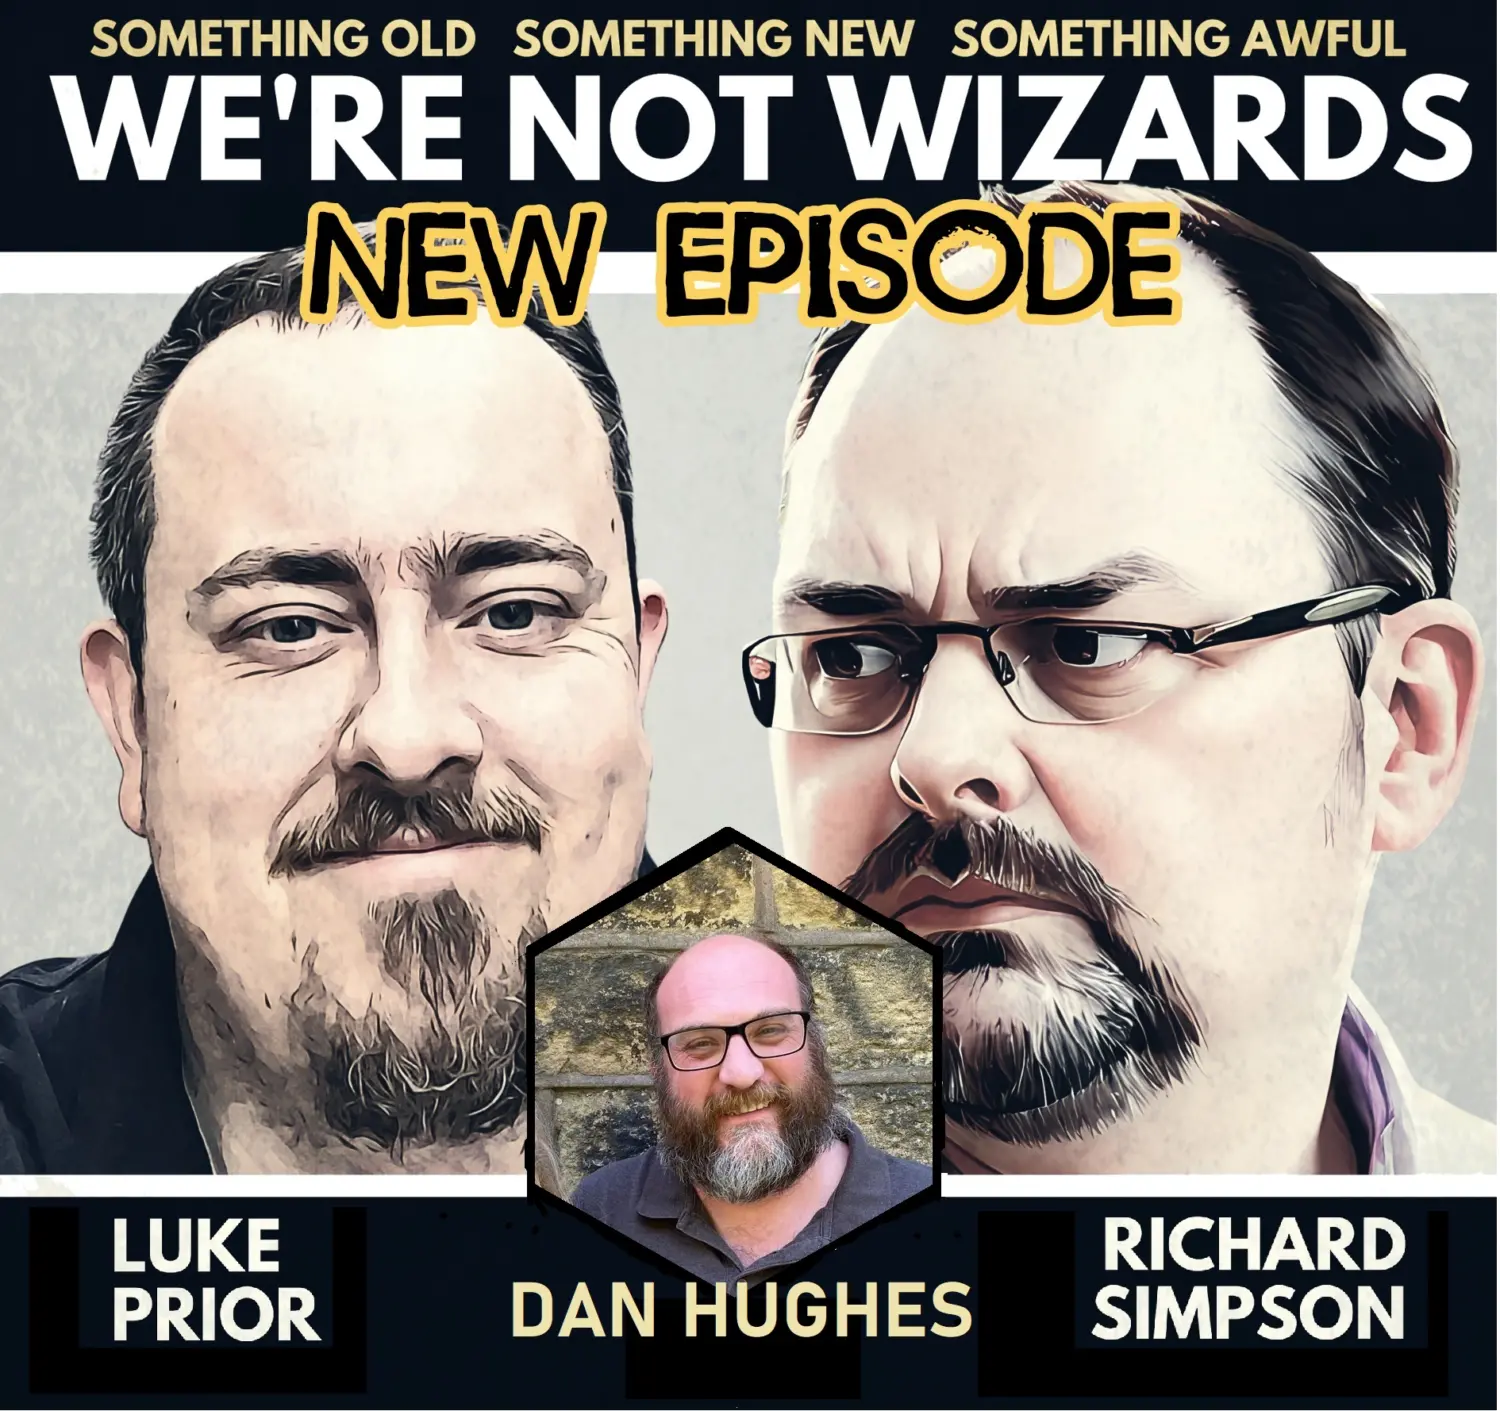 Dan Hughes Mix Tapes Podcast Artwork episode